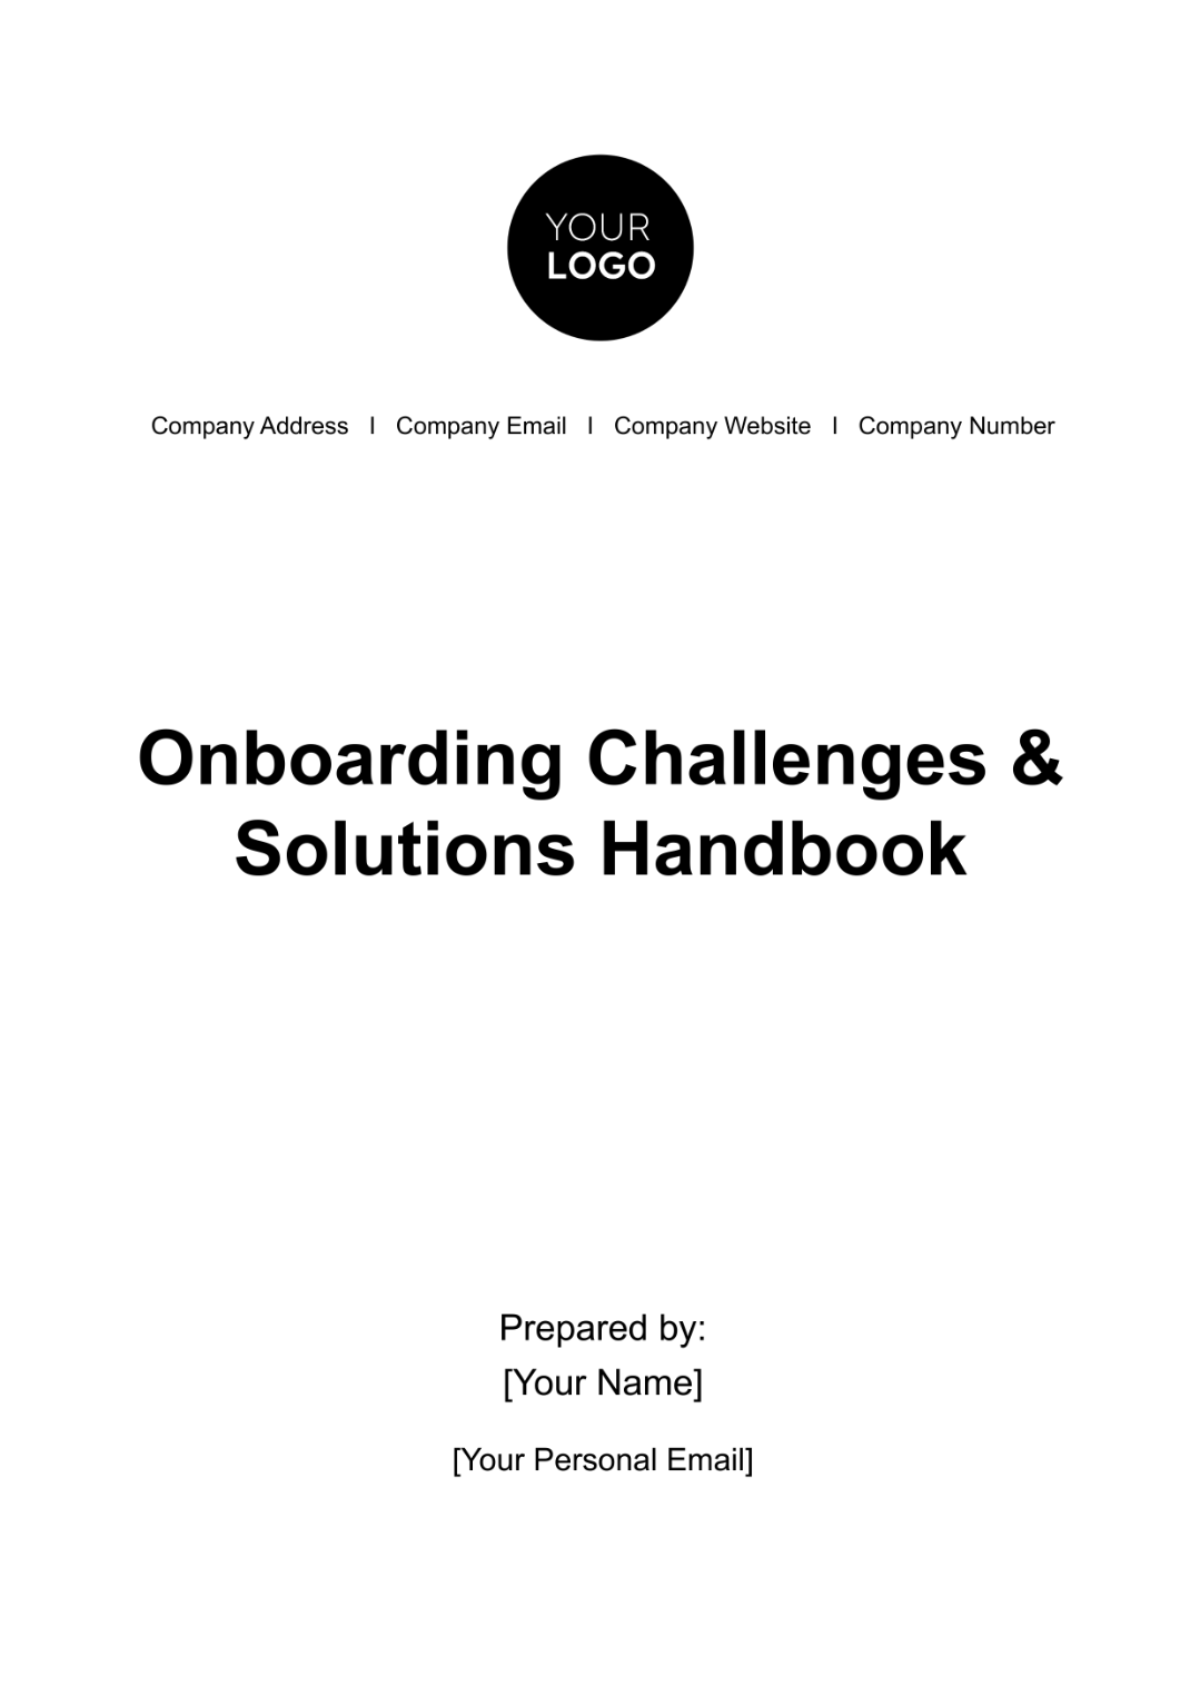 Onboarding Challenges & Solutions Handbook HR Template